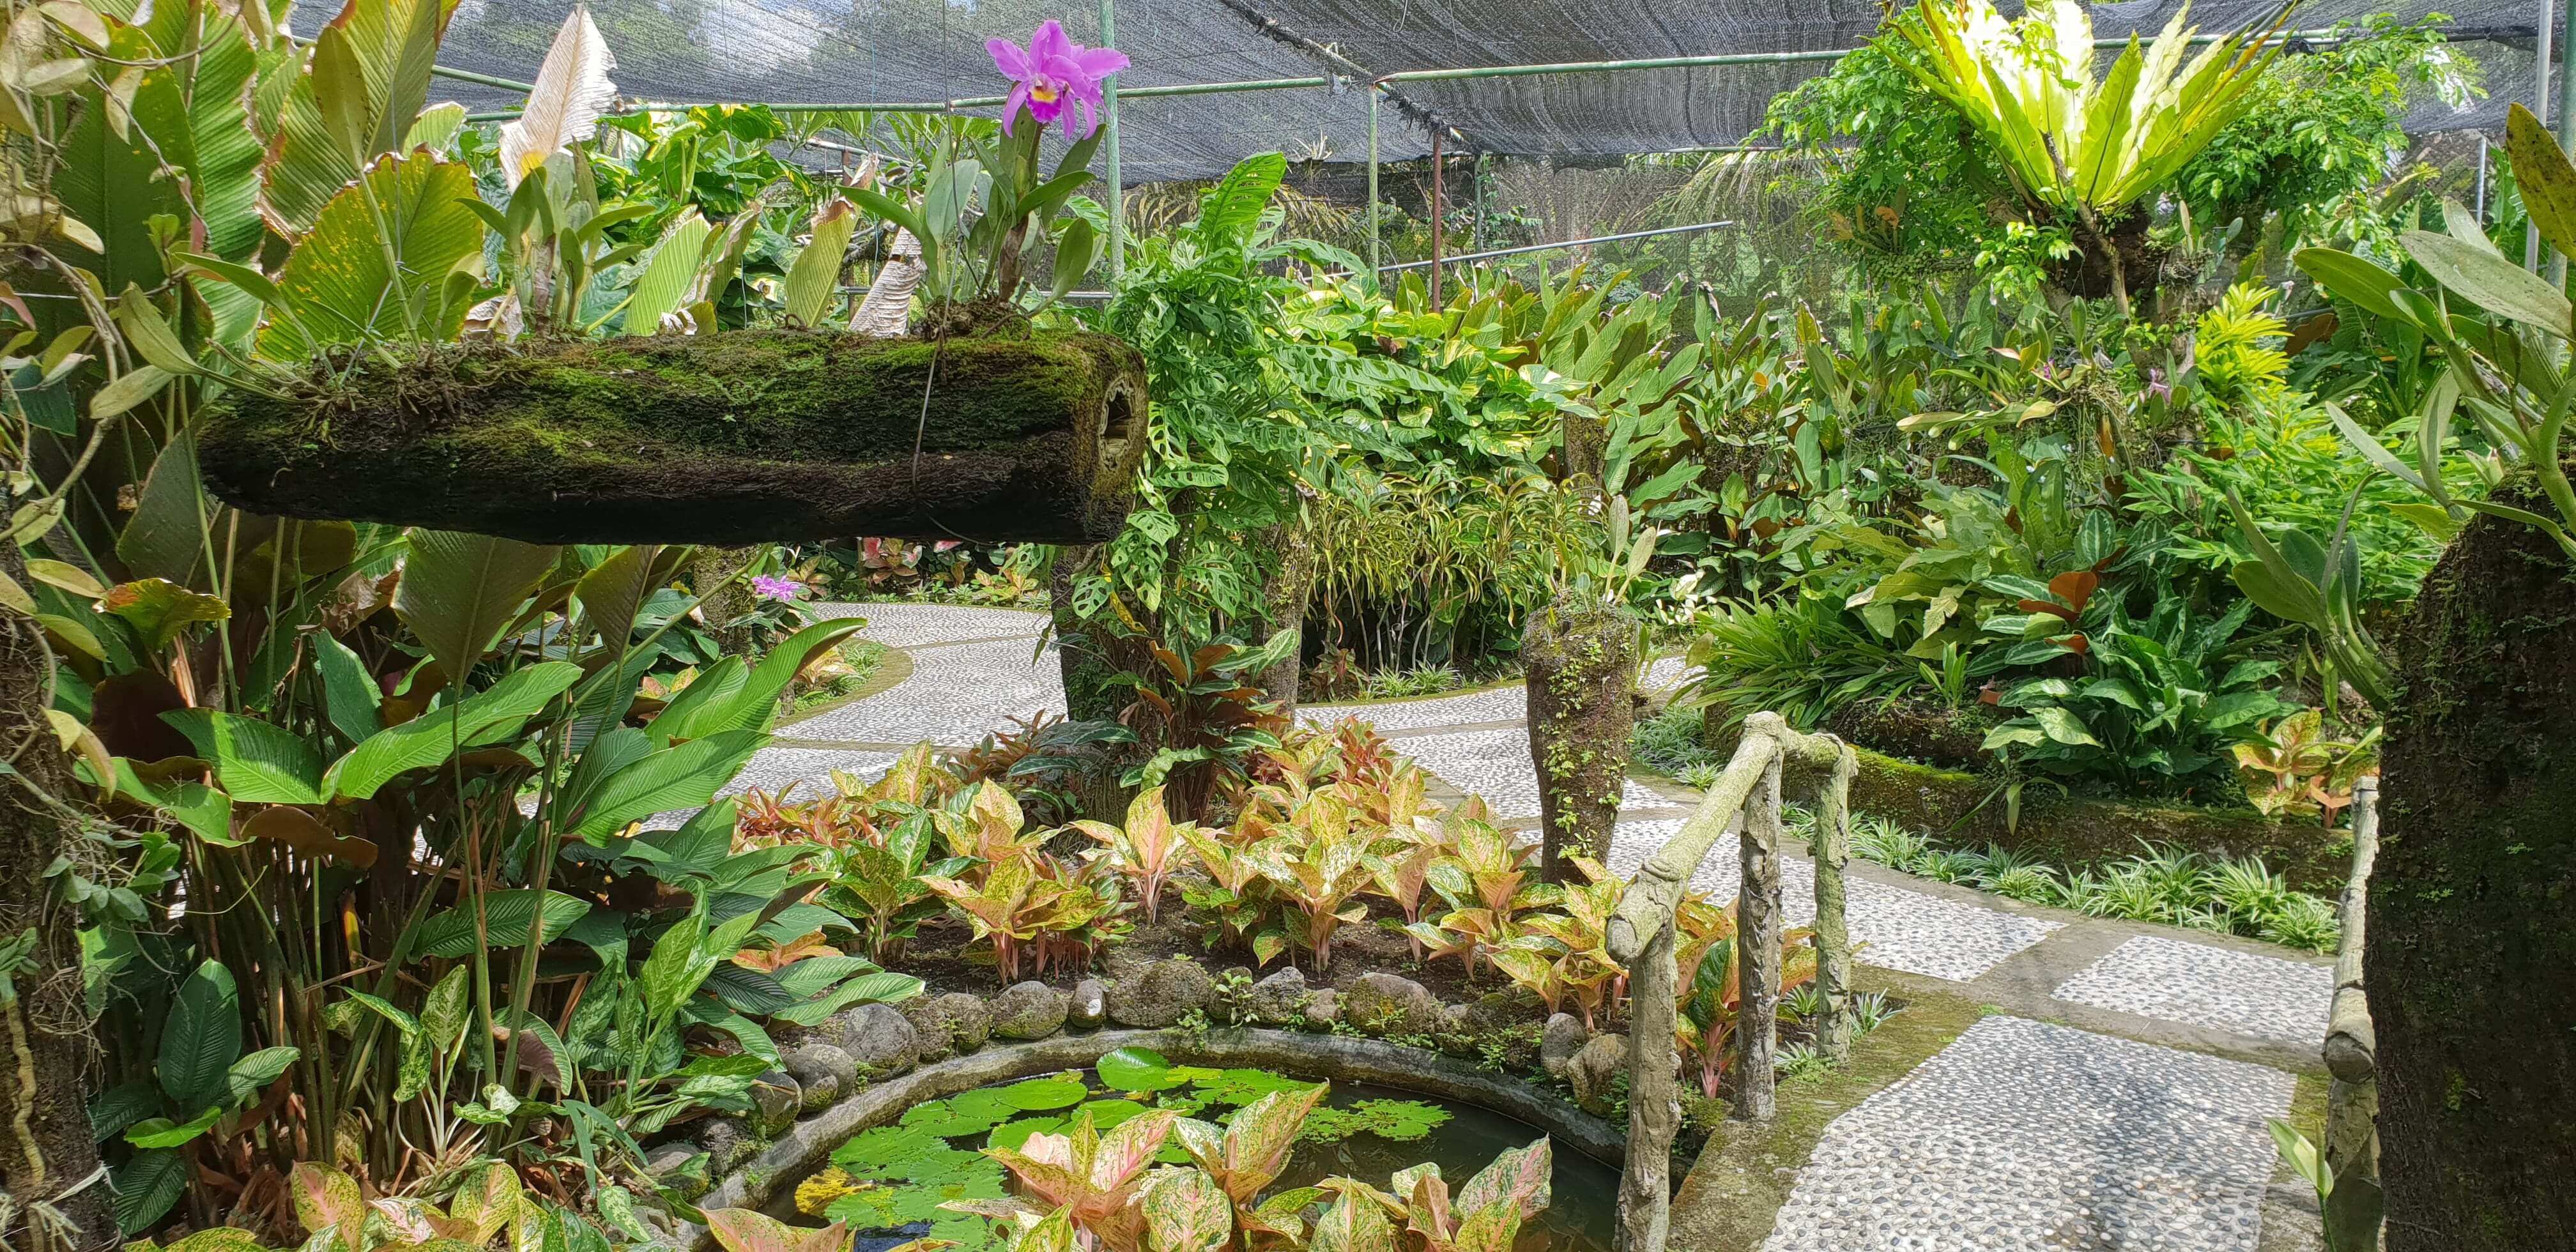 Beautiful views inside the Bali Orchid garden